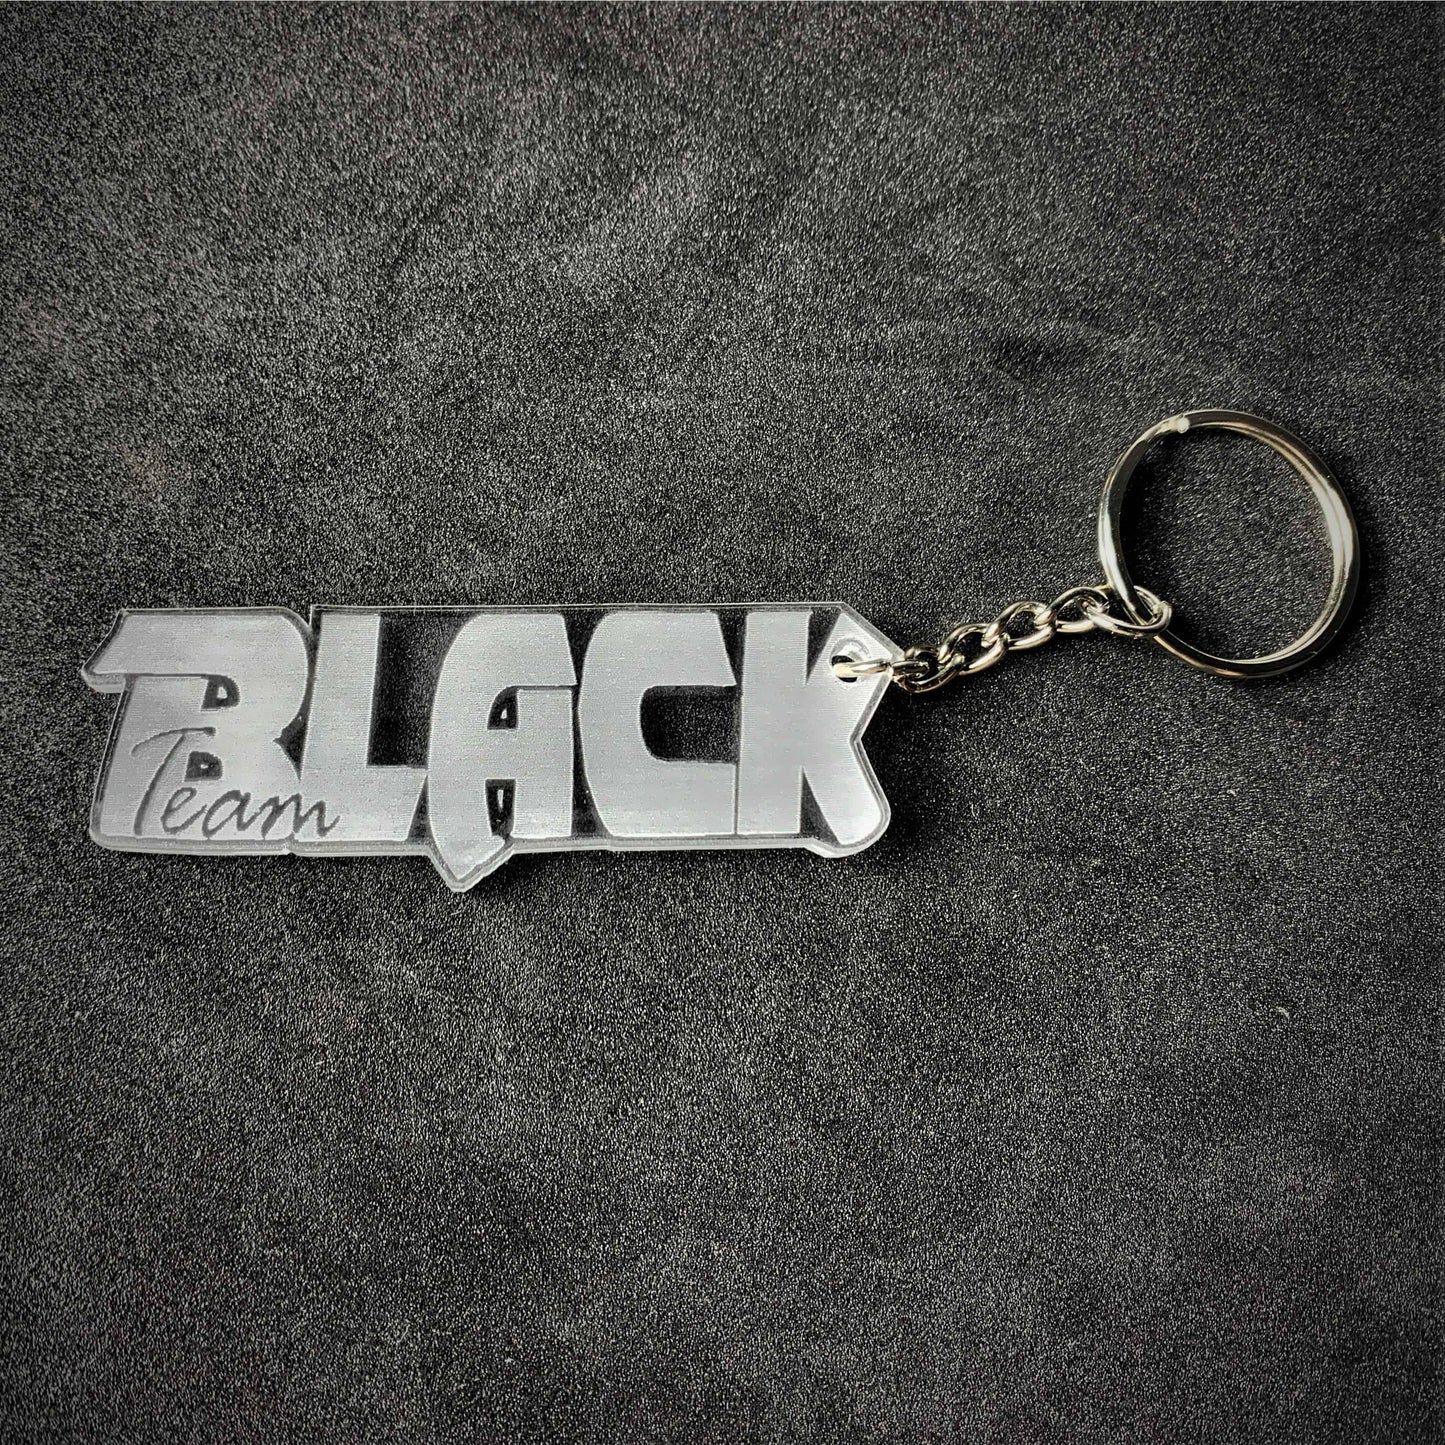 Team Black Banger Key Ring - Key Ring - Stock Car & Banger Toy Tracks